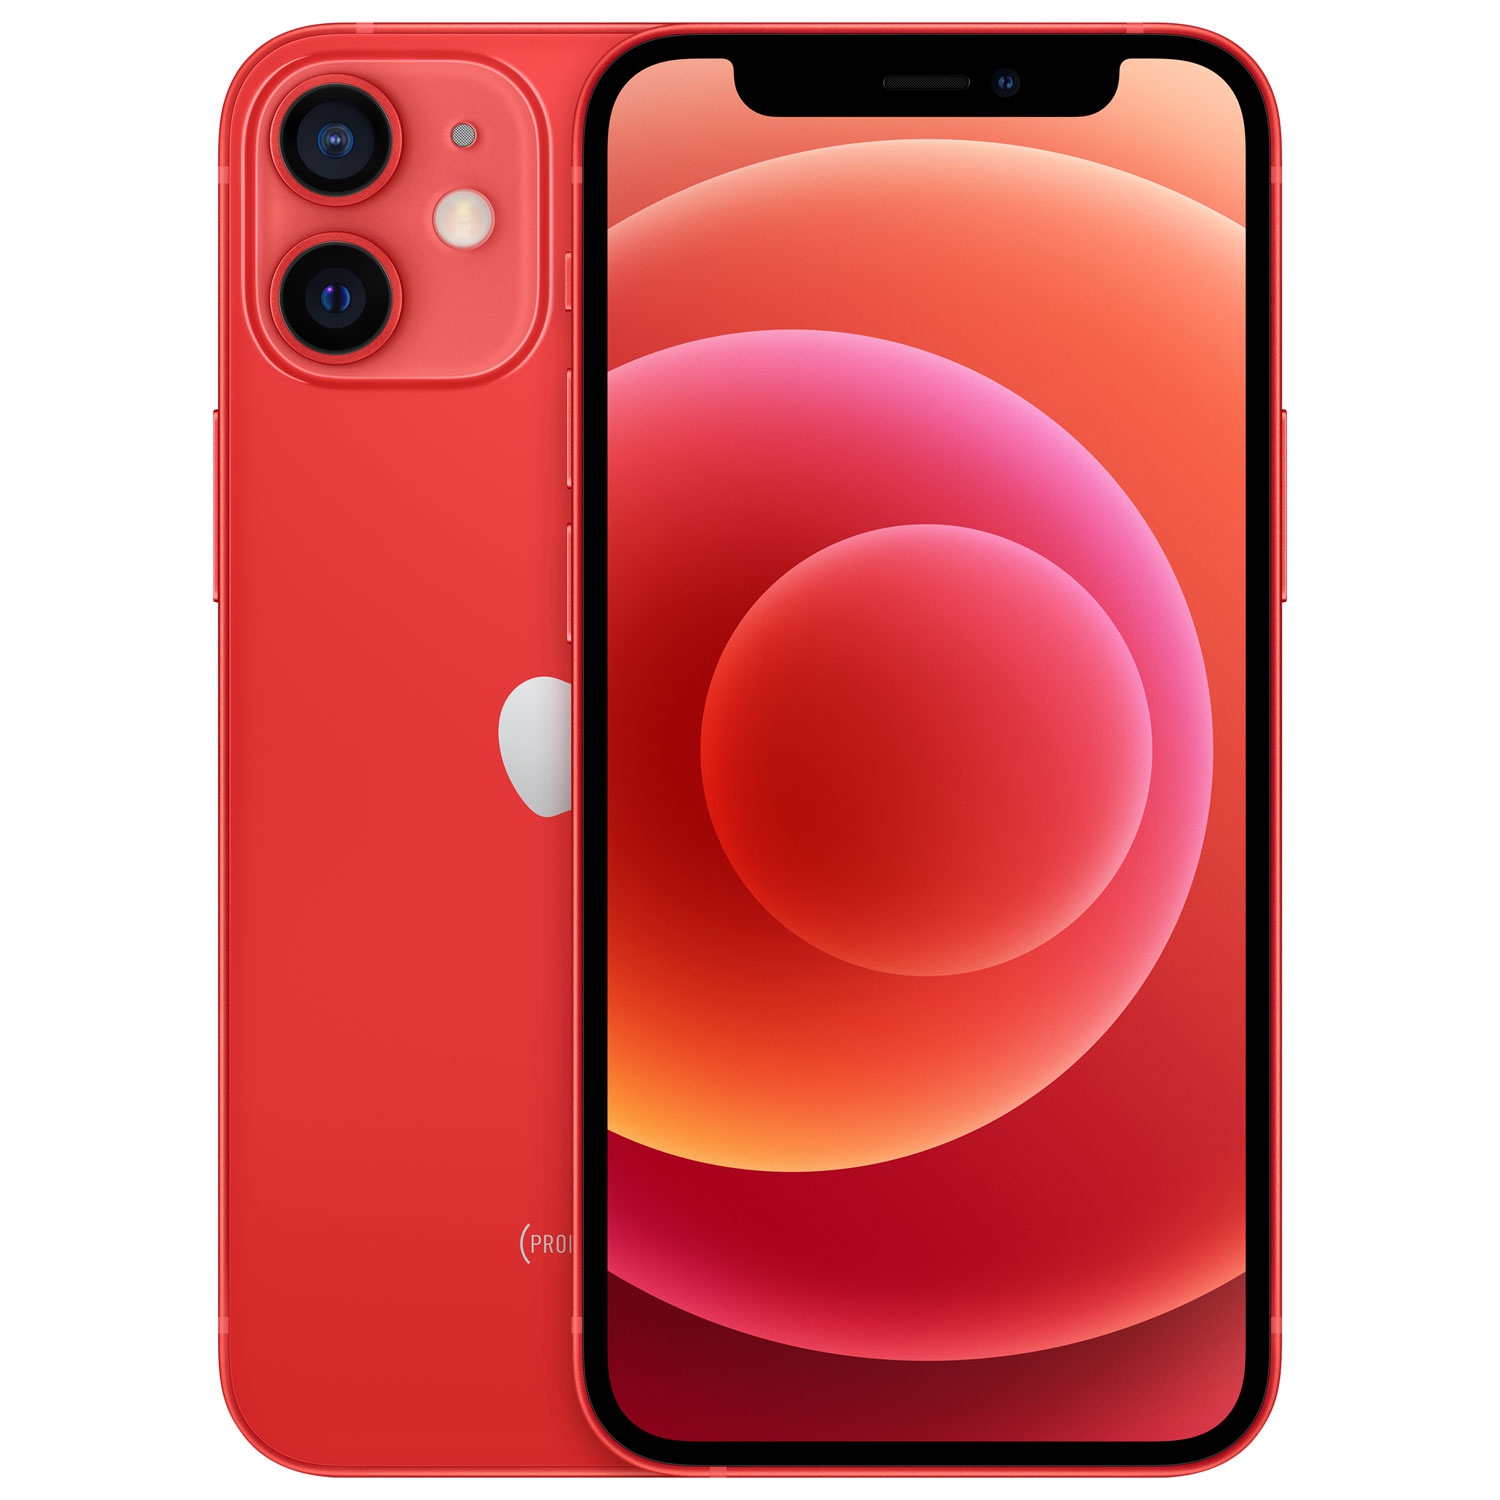 Refurbished (Fair) - Apple iPhone 12 mini 256GB - (PRODUCT)RED - Unlocked